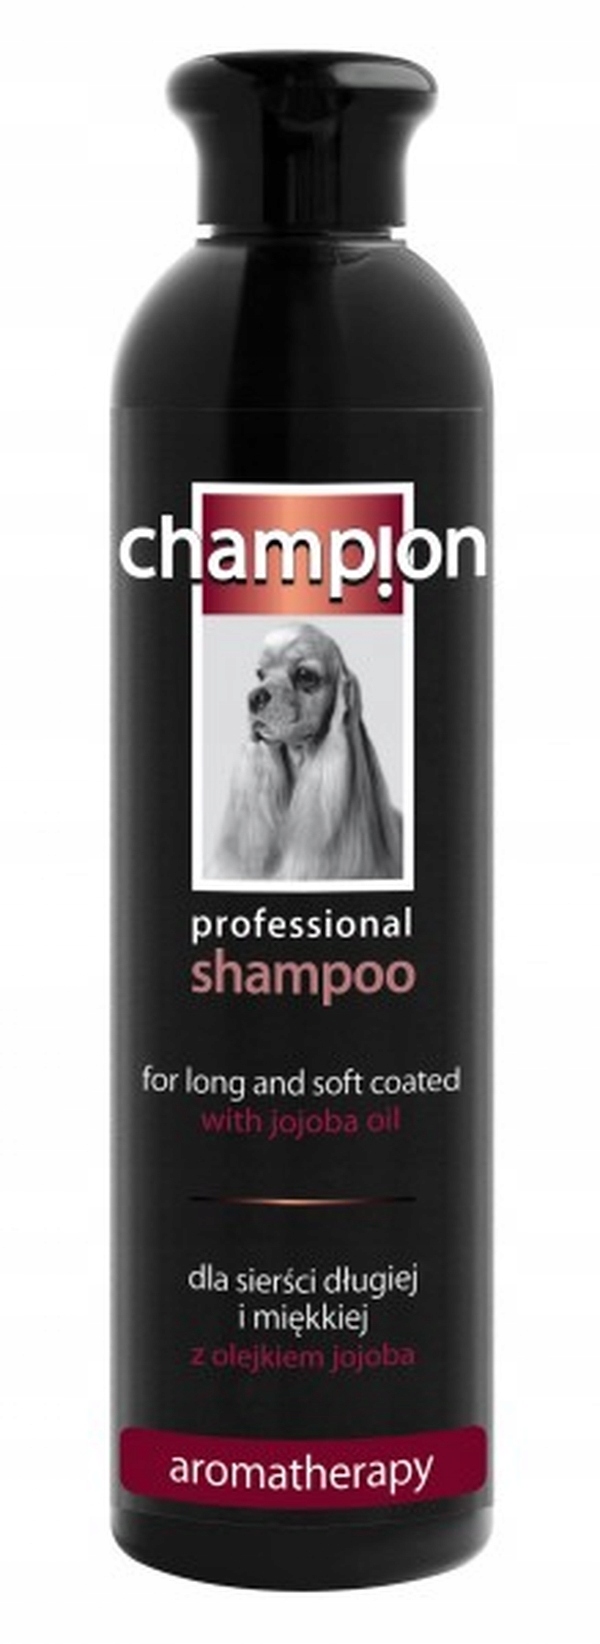 champion szampon allegro